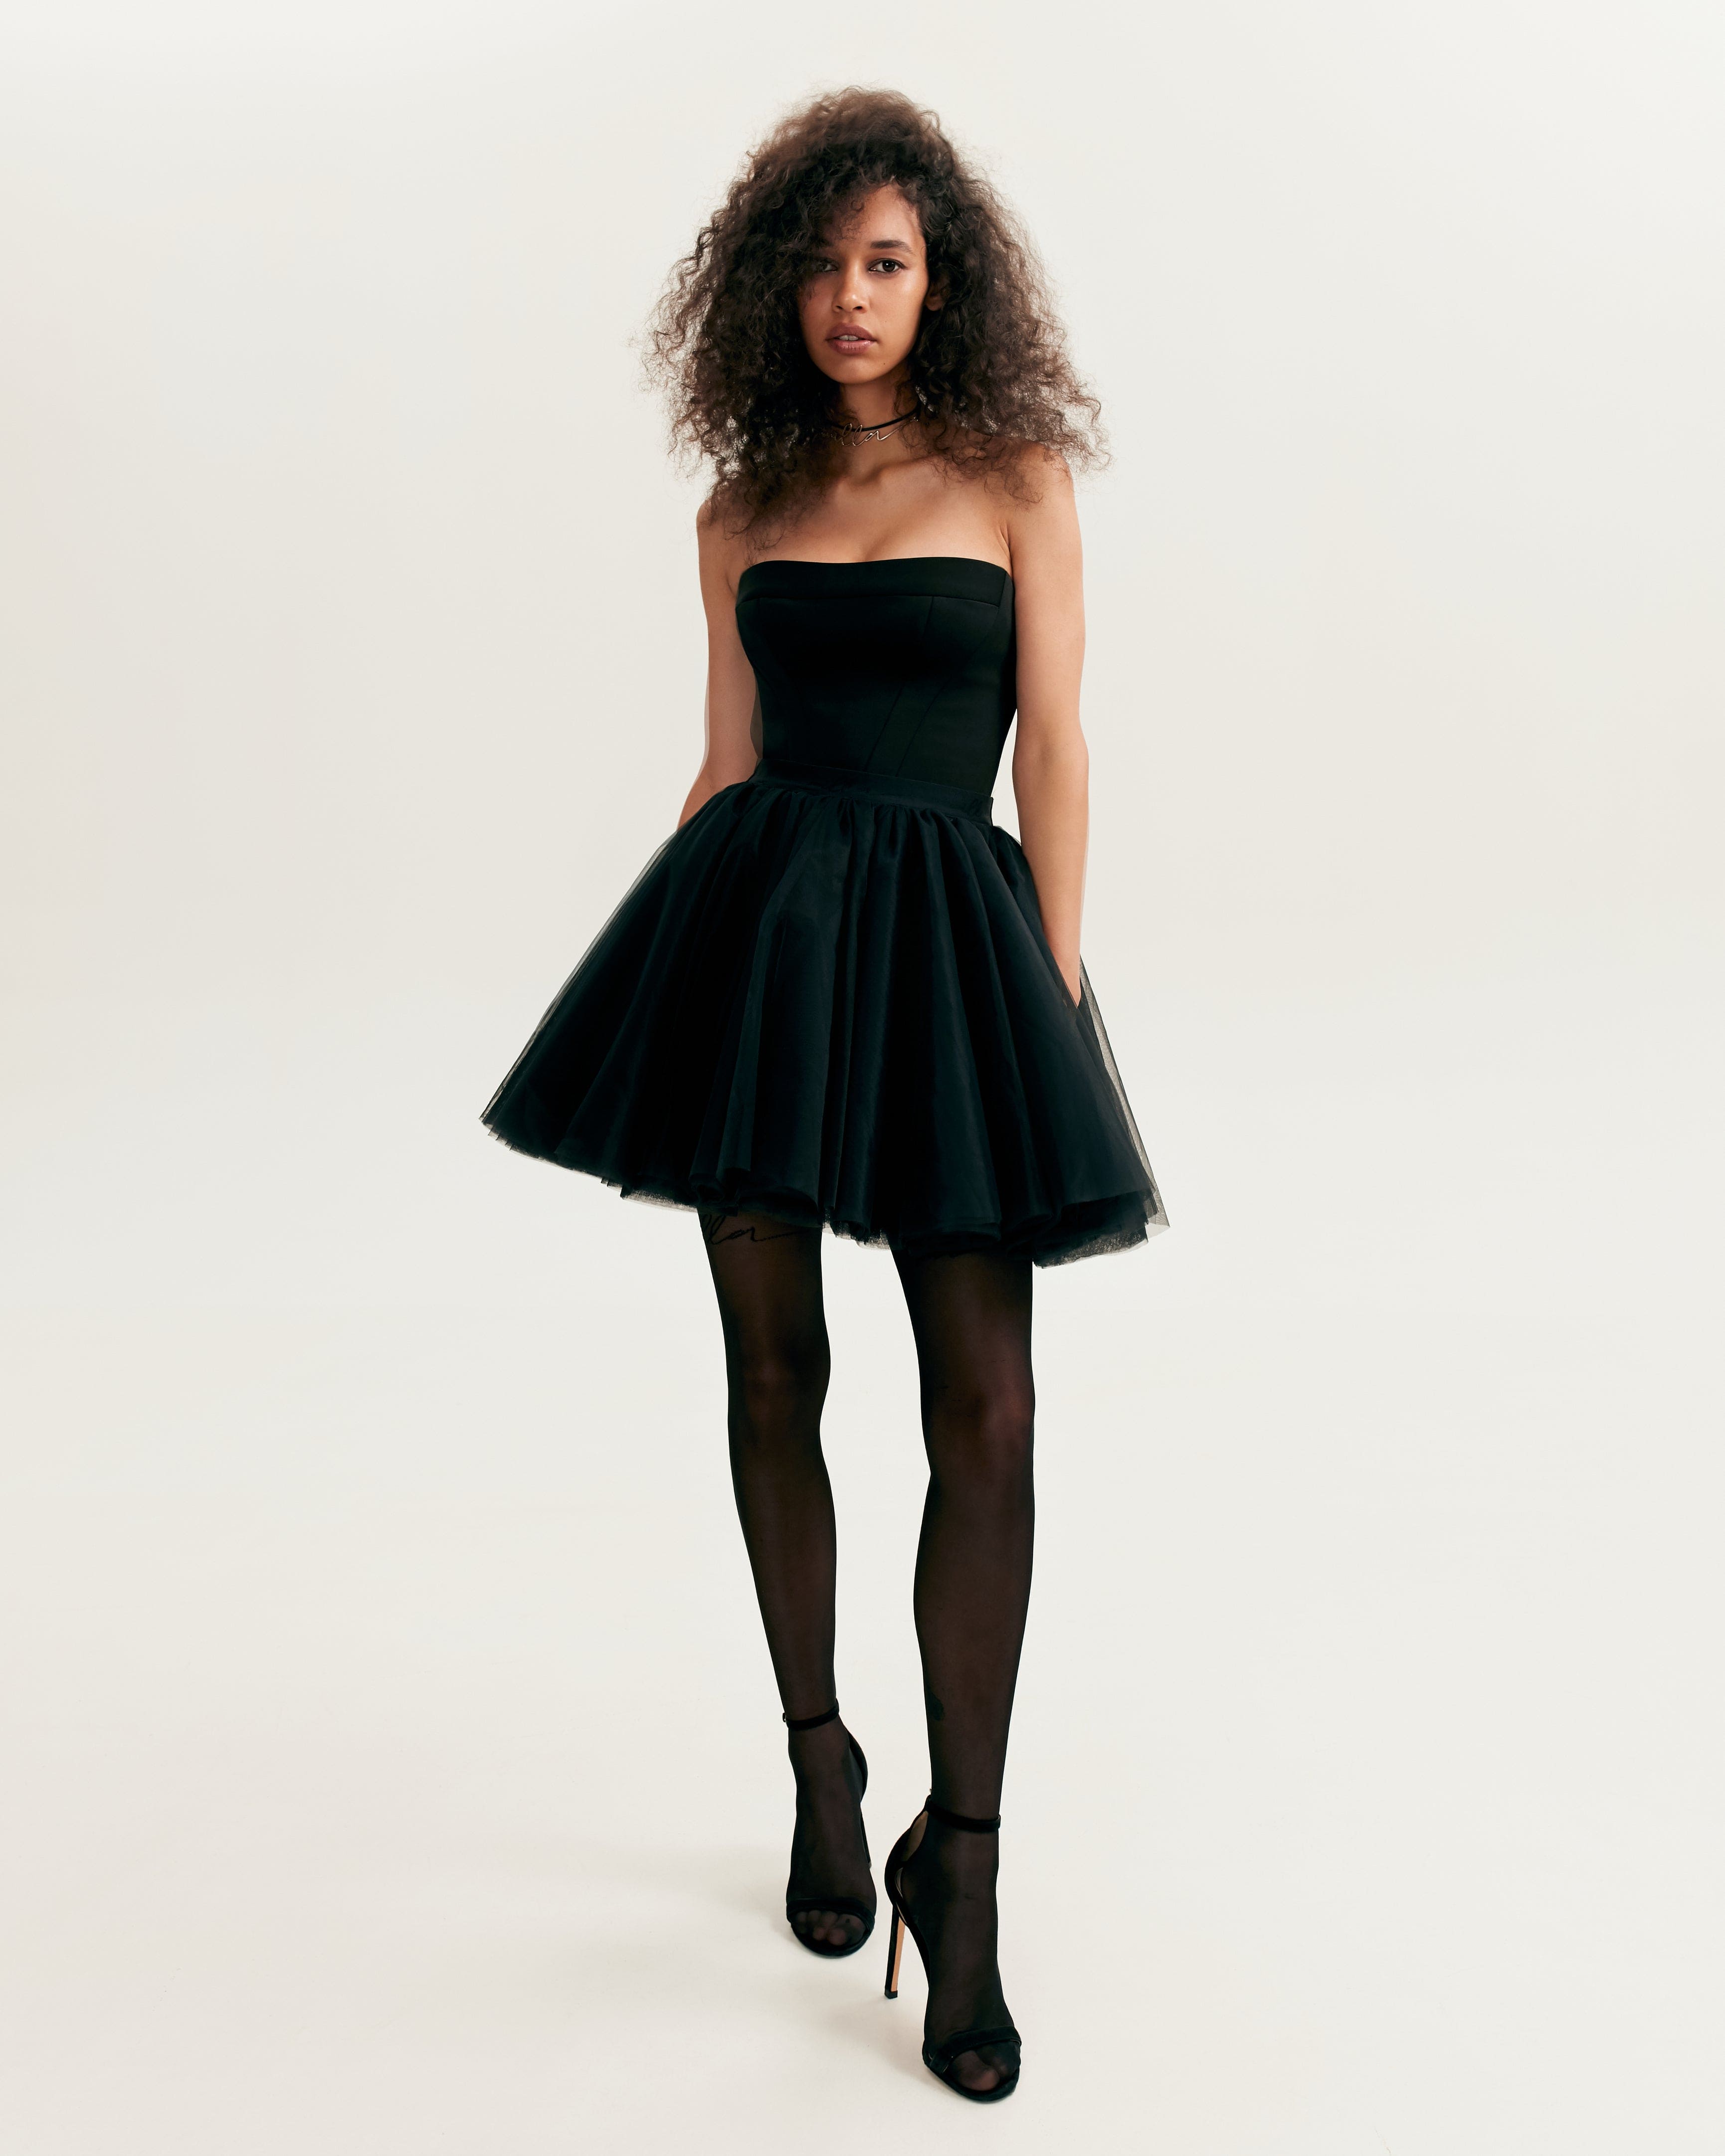 Carmilla Bodysuit - Lace Corset Bodysuit in Black Lace  Lace bodysuit  outfit, Black lace bodysuit, Bodysuit fashion